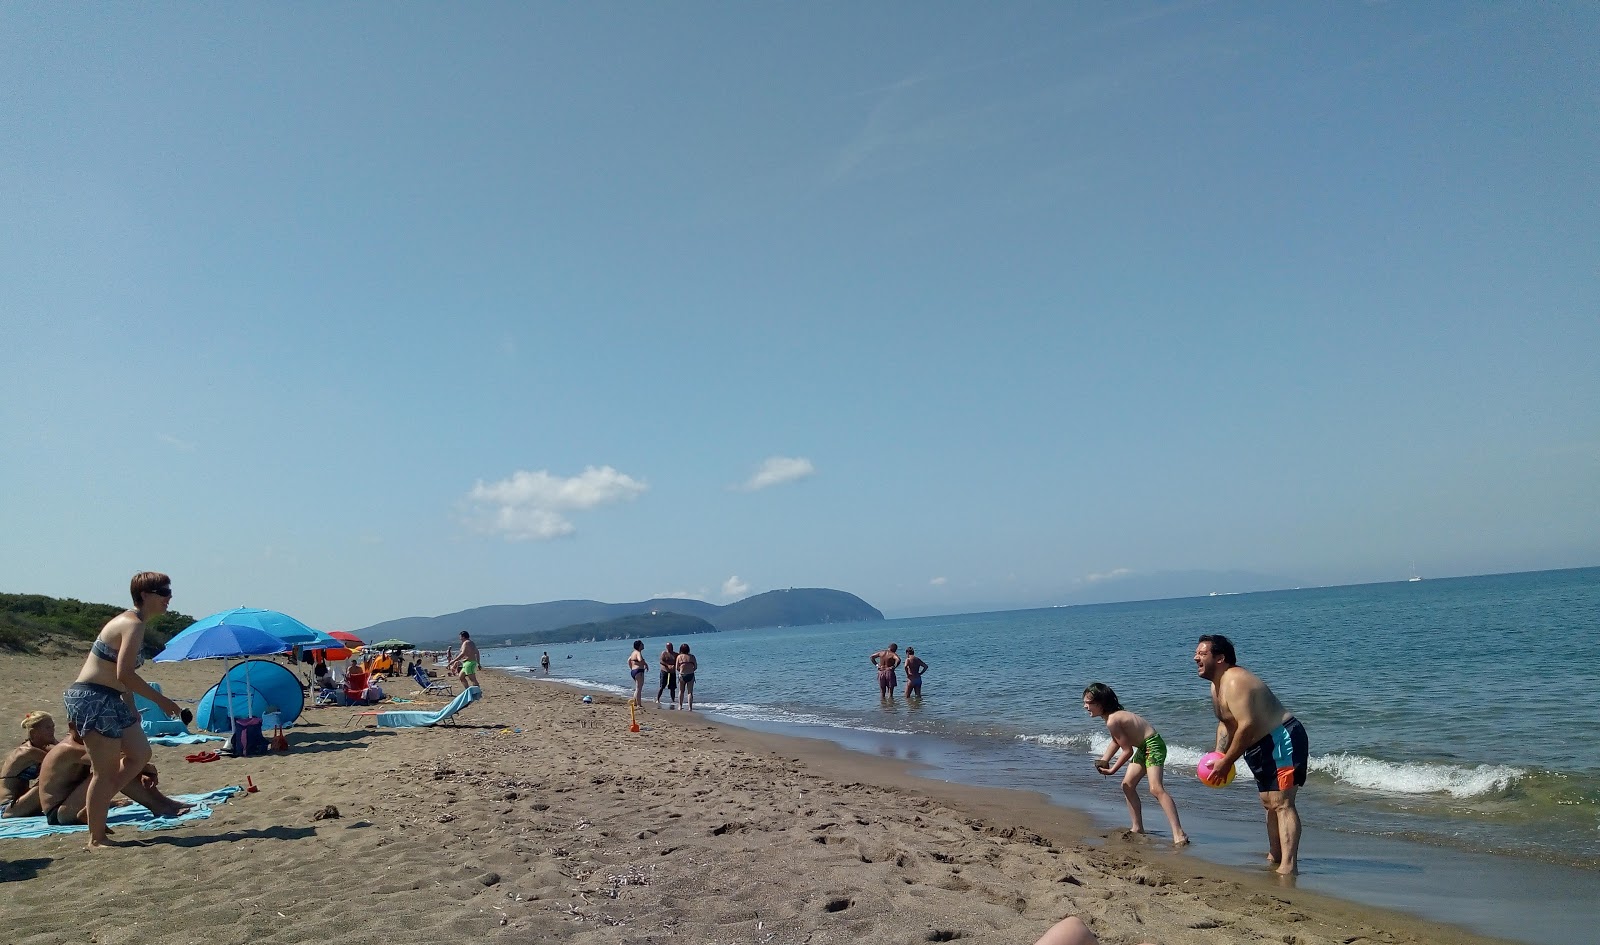 Fotografija Spiaggia di Rimigliano II z modra voda površino